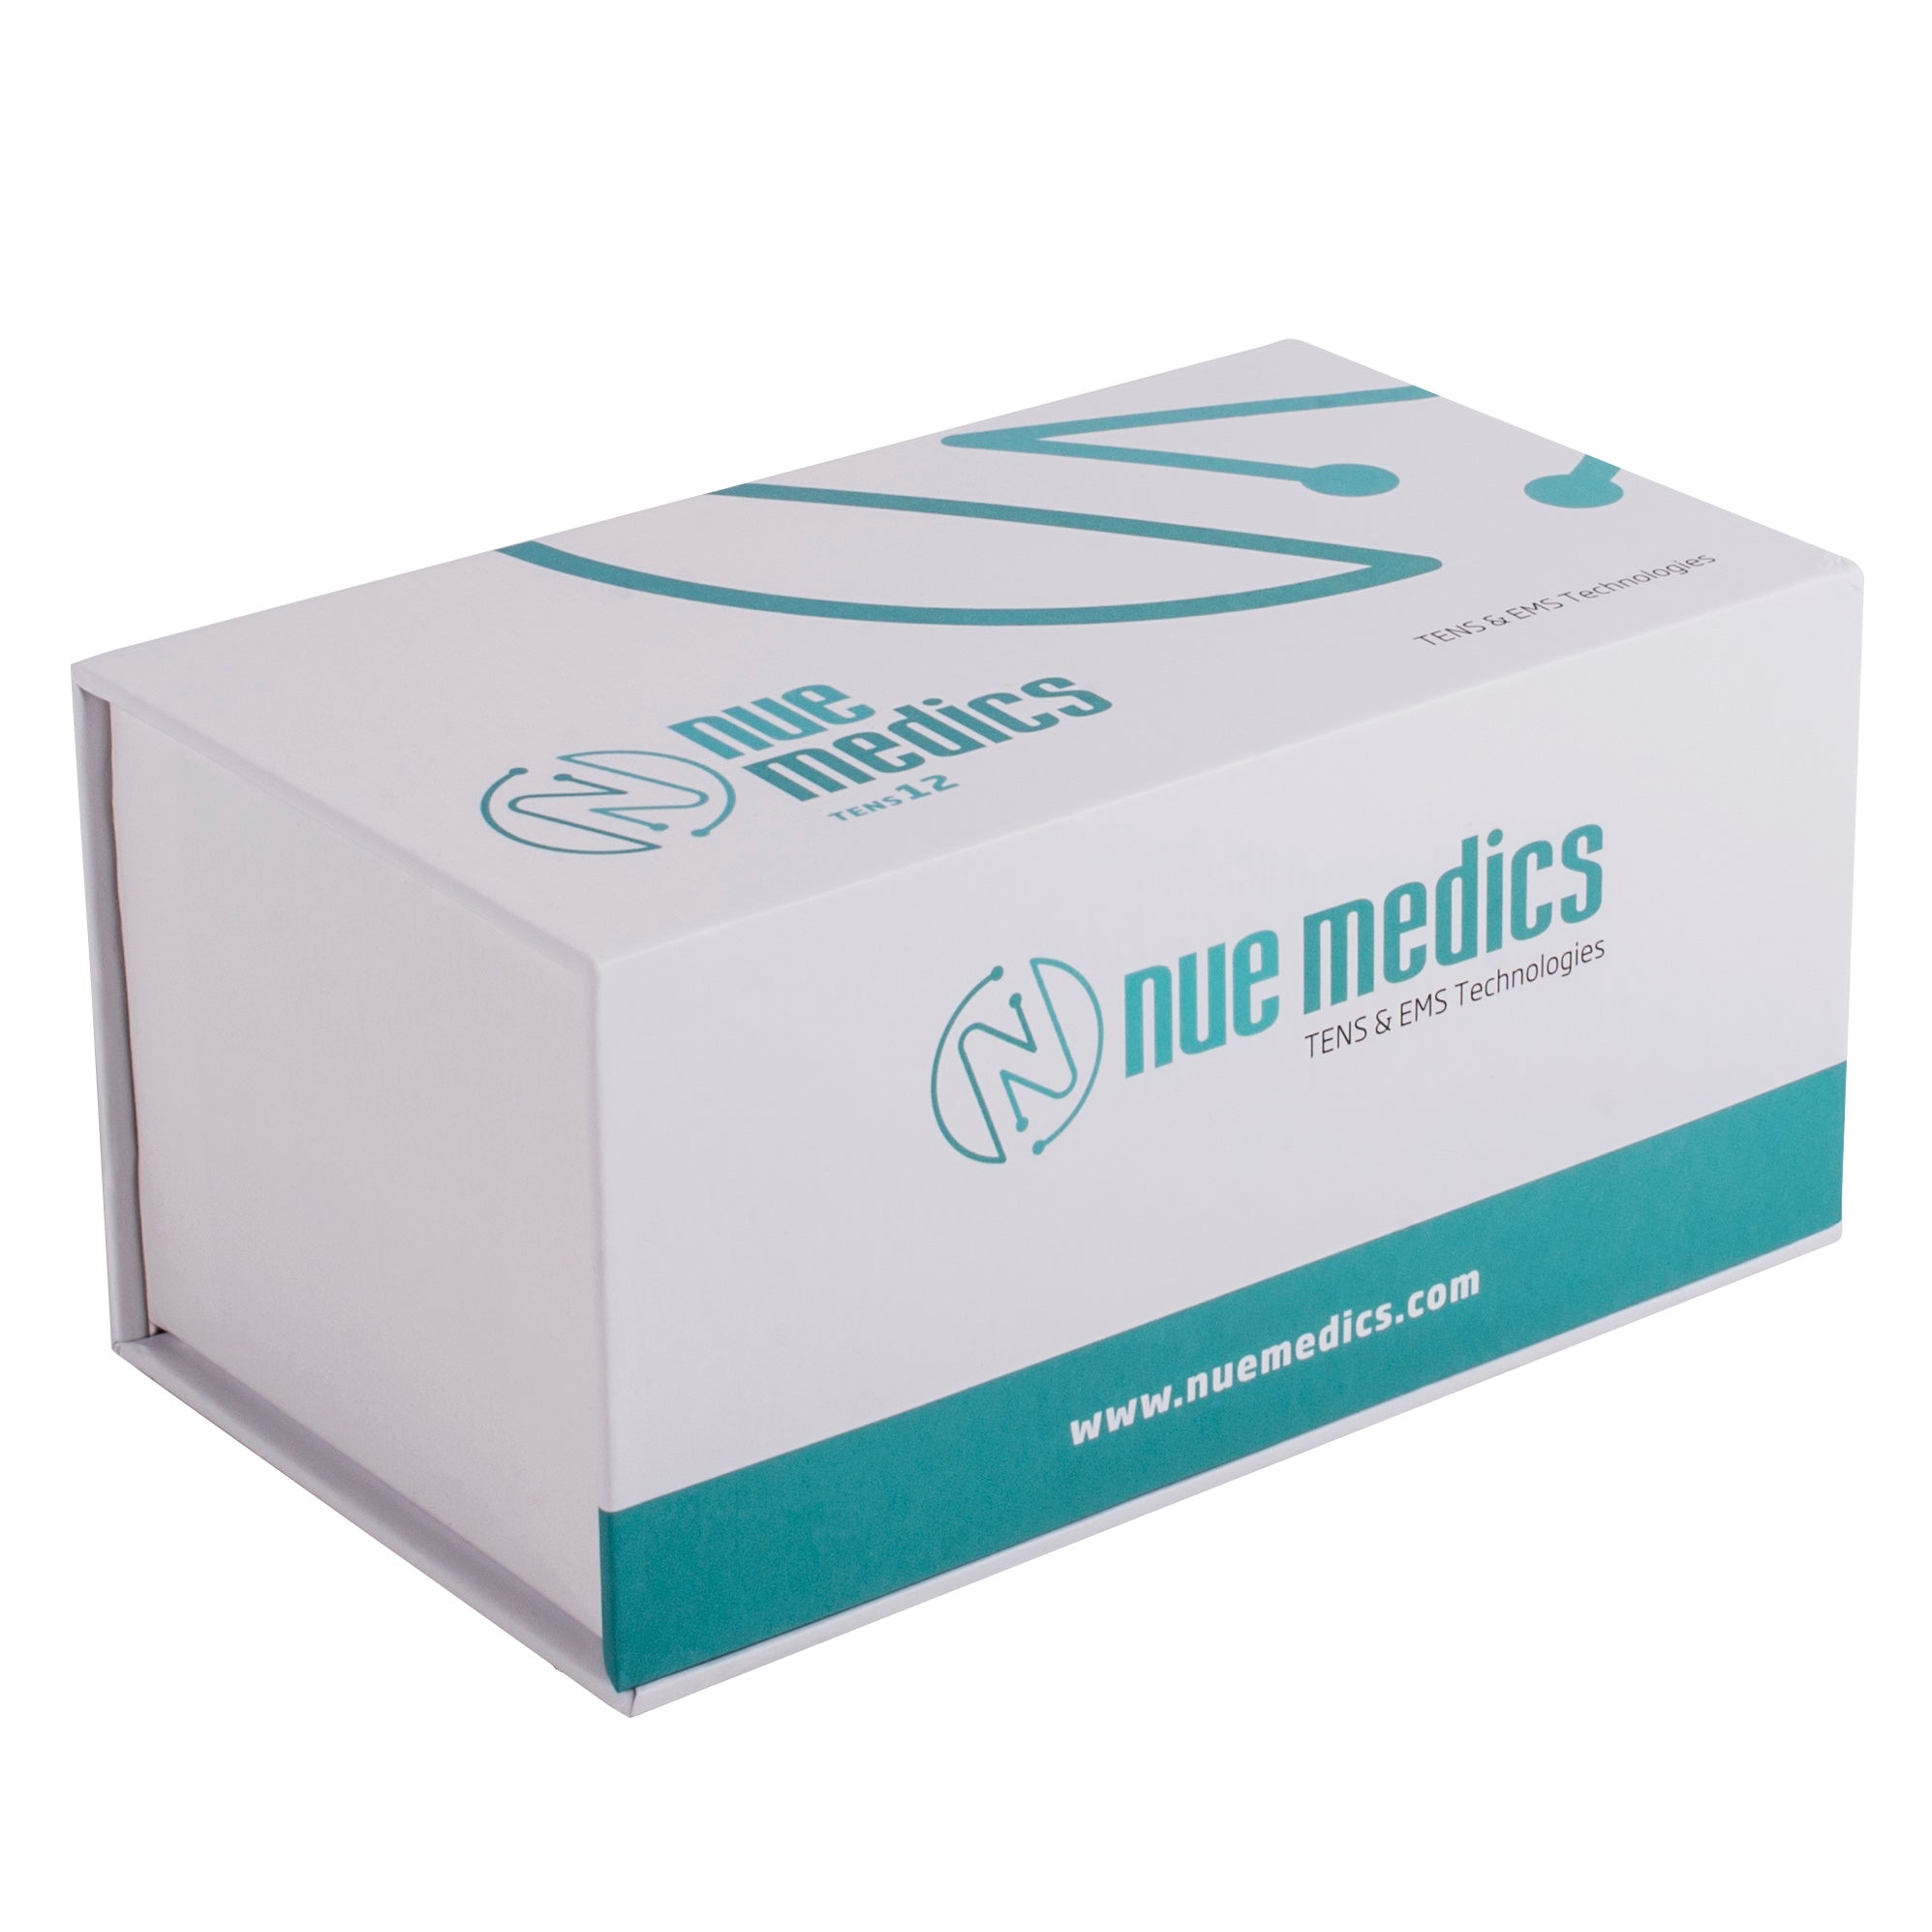 NueMedics Rechargeable Tens 24 Muscle Stimulator Complete Set + Flex Snap  on Belt for Lower Back + S…See more NueMedics Rechargeable Tens 24 Muscle